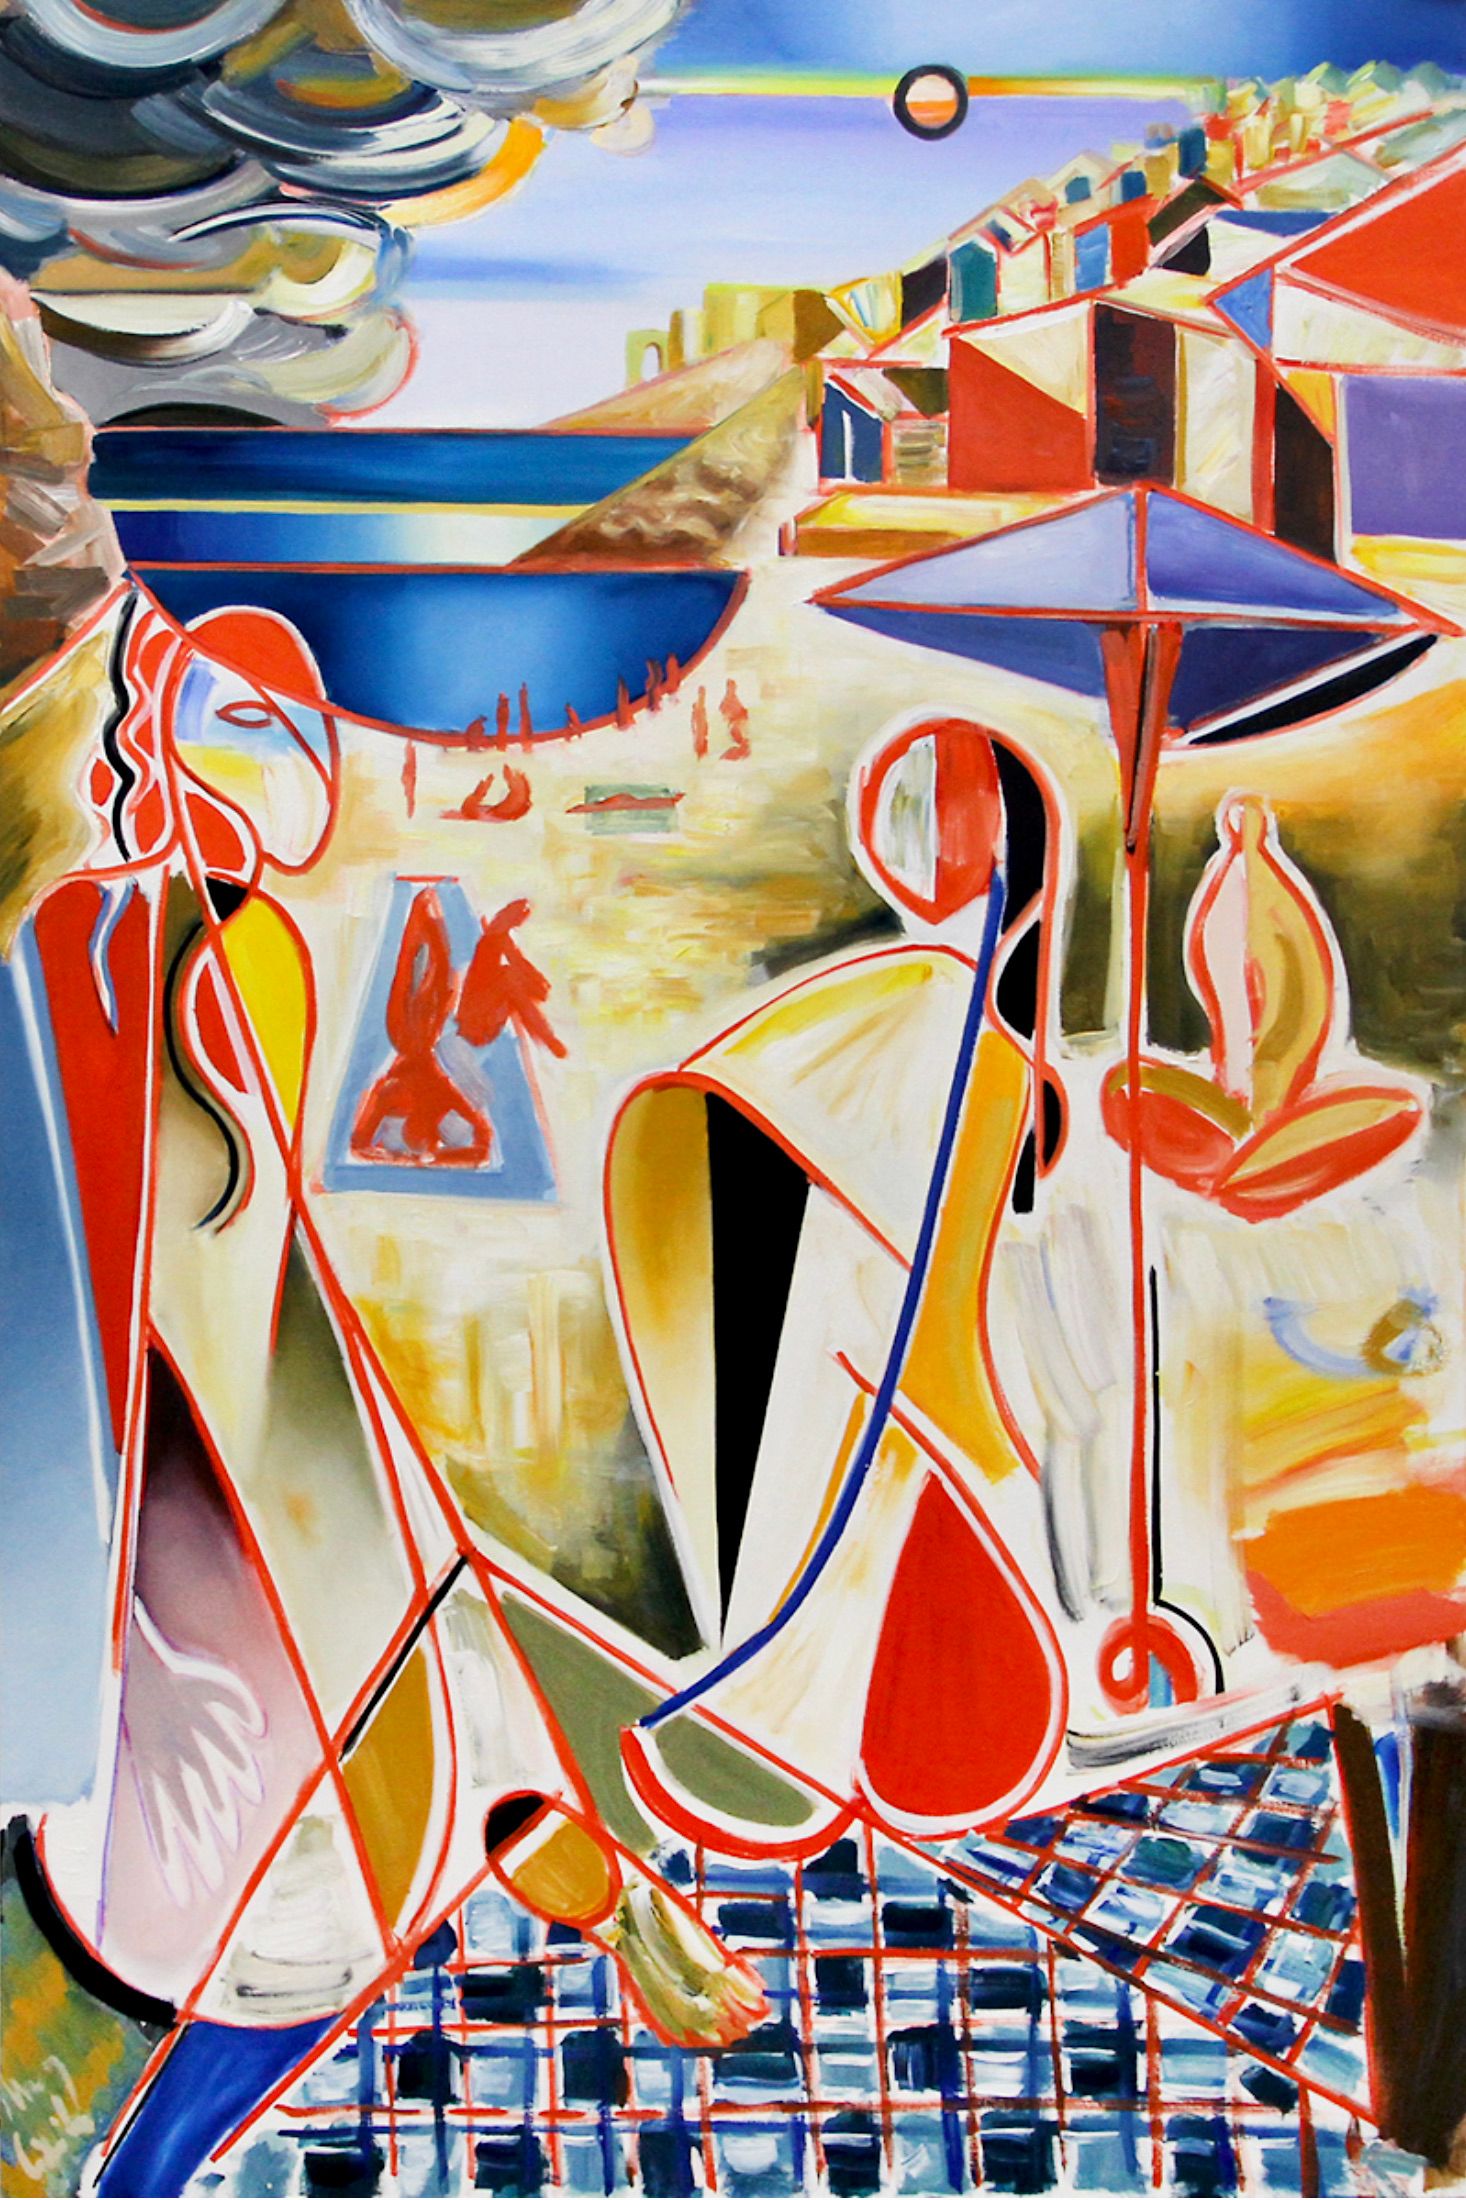 MECESLA Maciej Cieśla, "The coast, abstract shapes, Italy", Peinture abstraite colorée sur toile